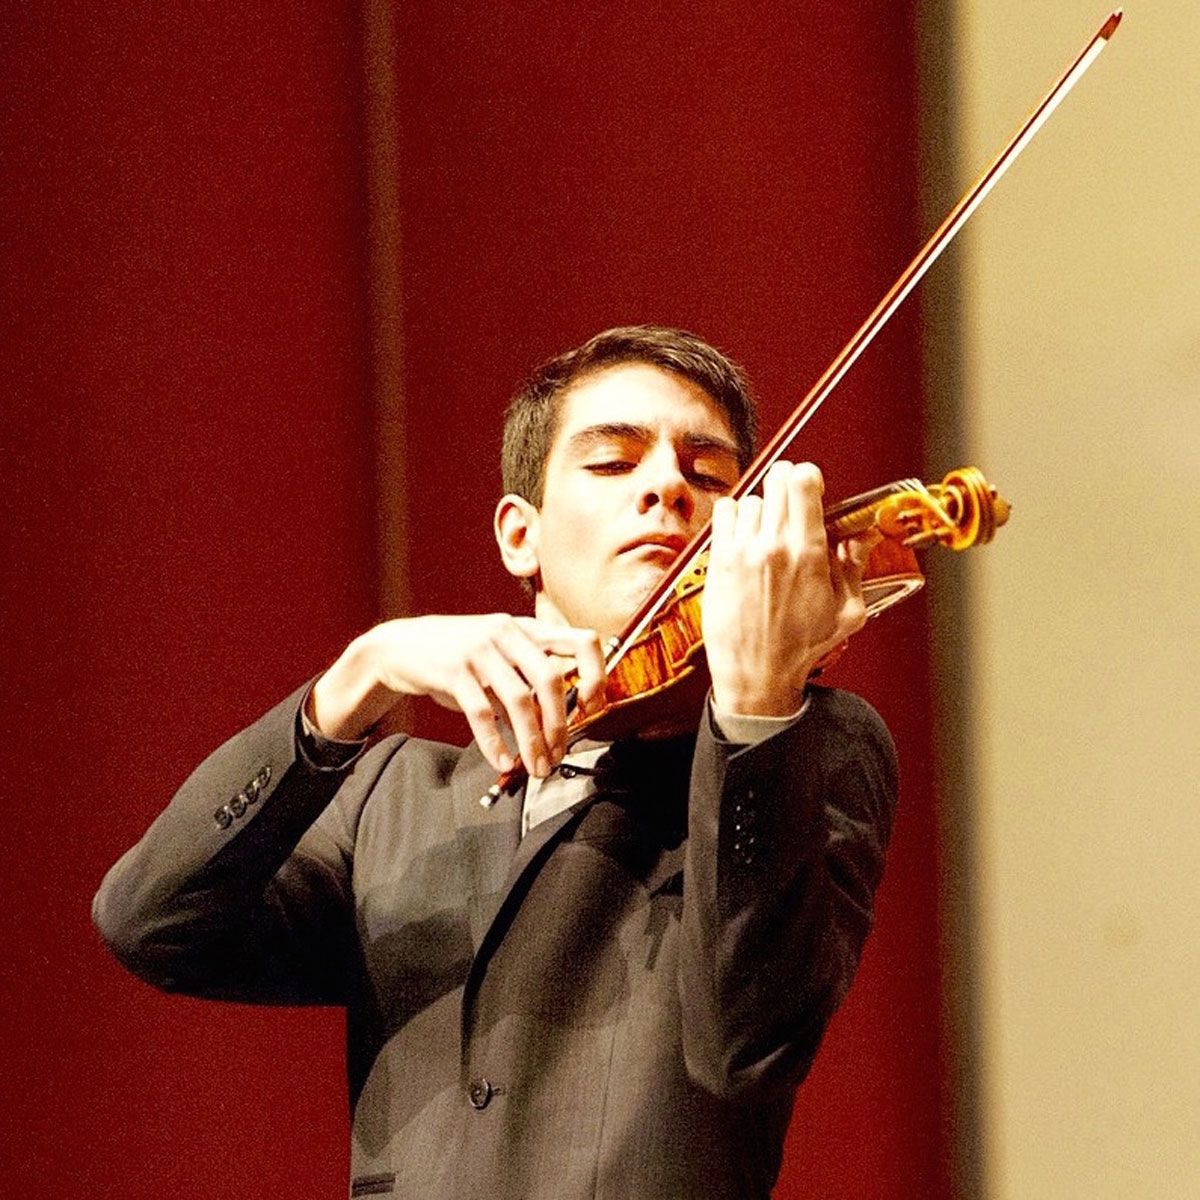 Sean Elliot playing the violin.